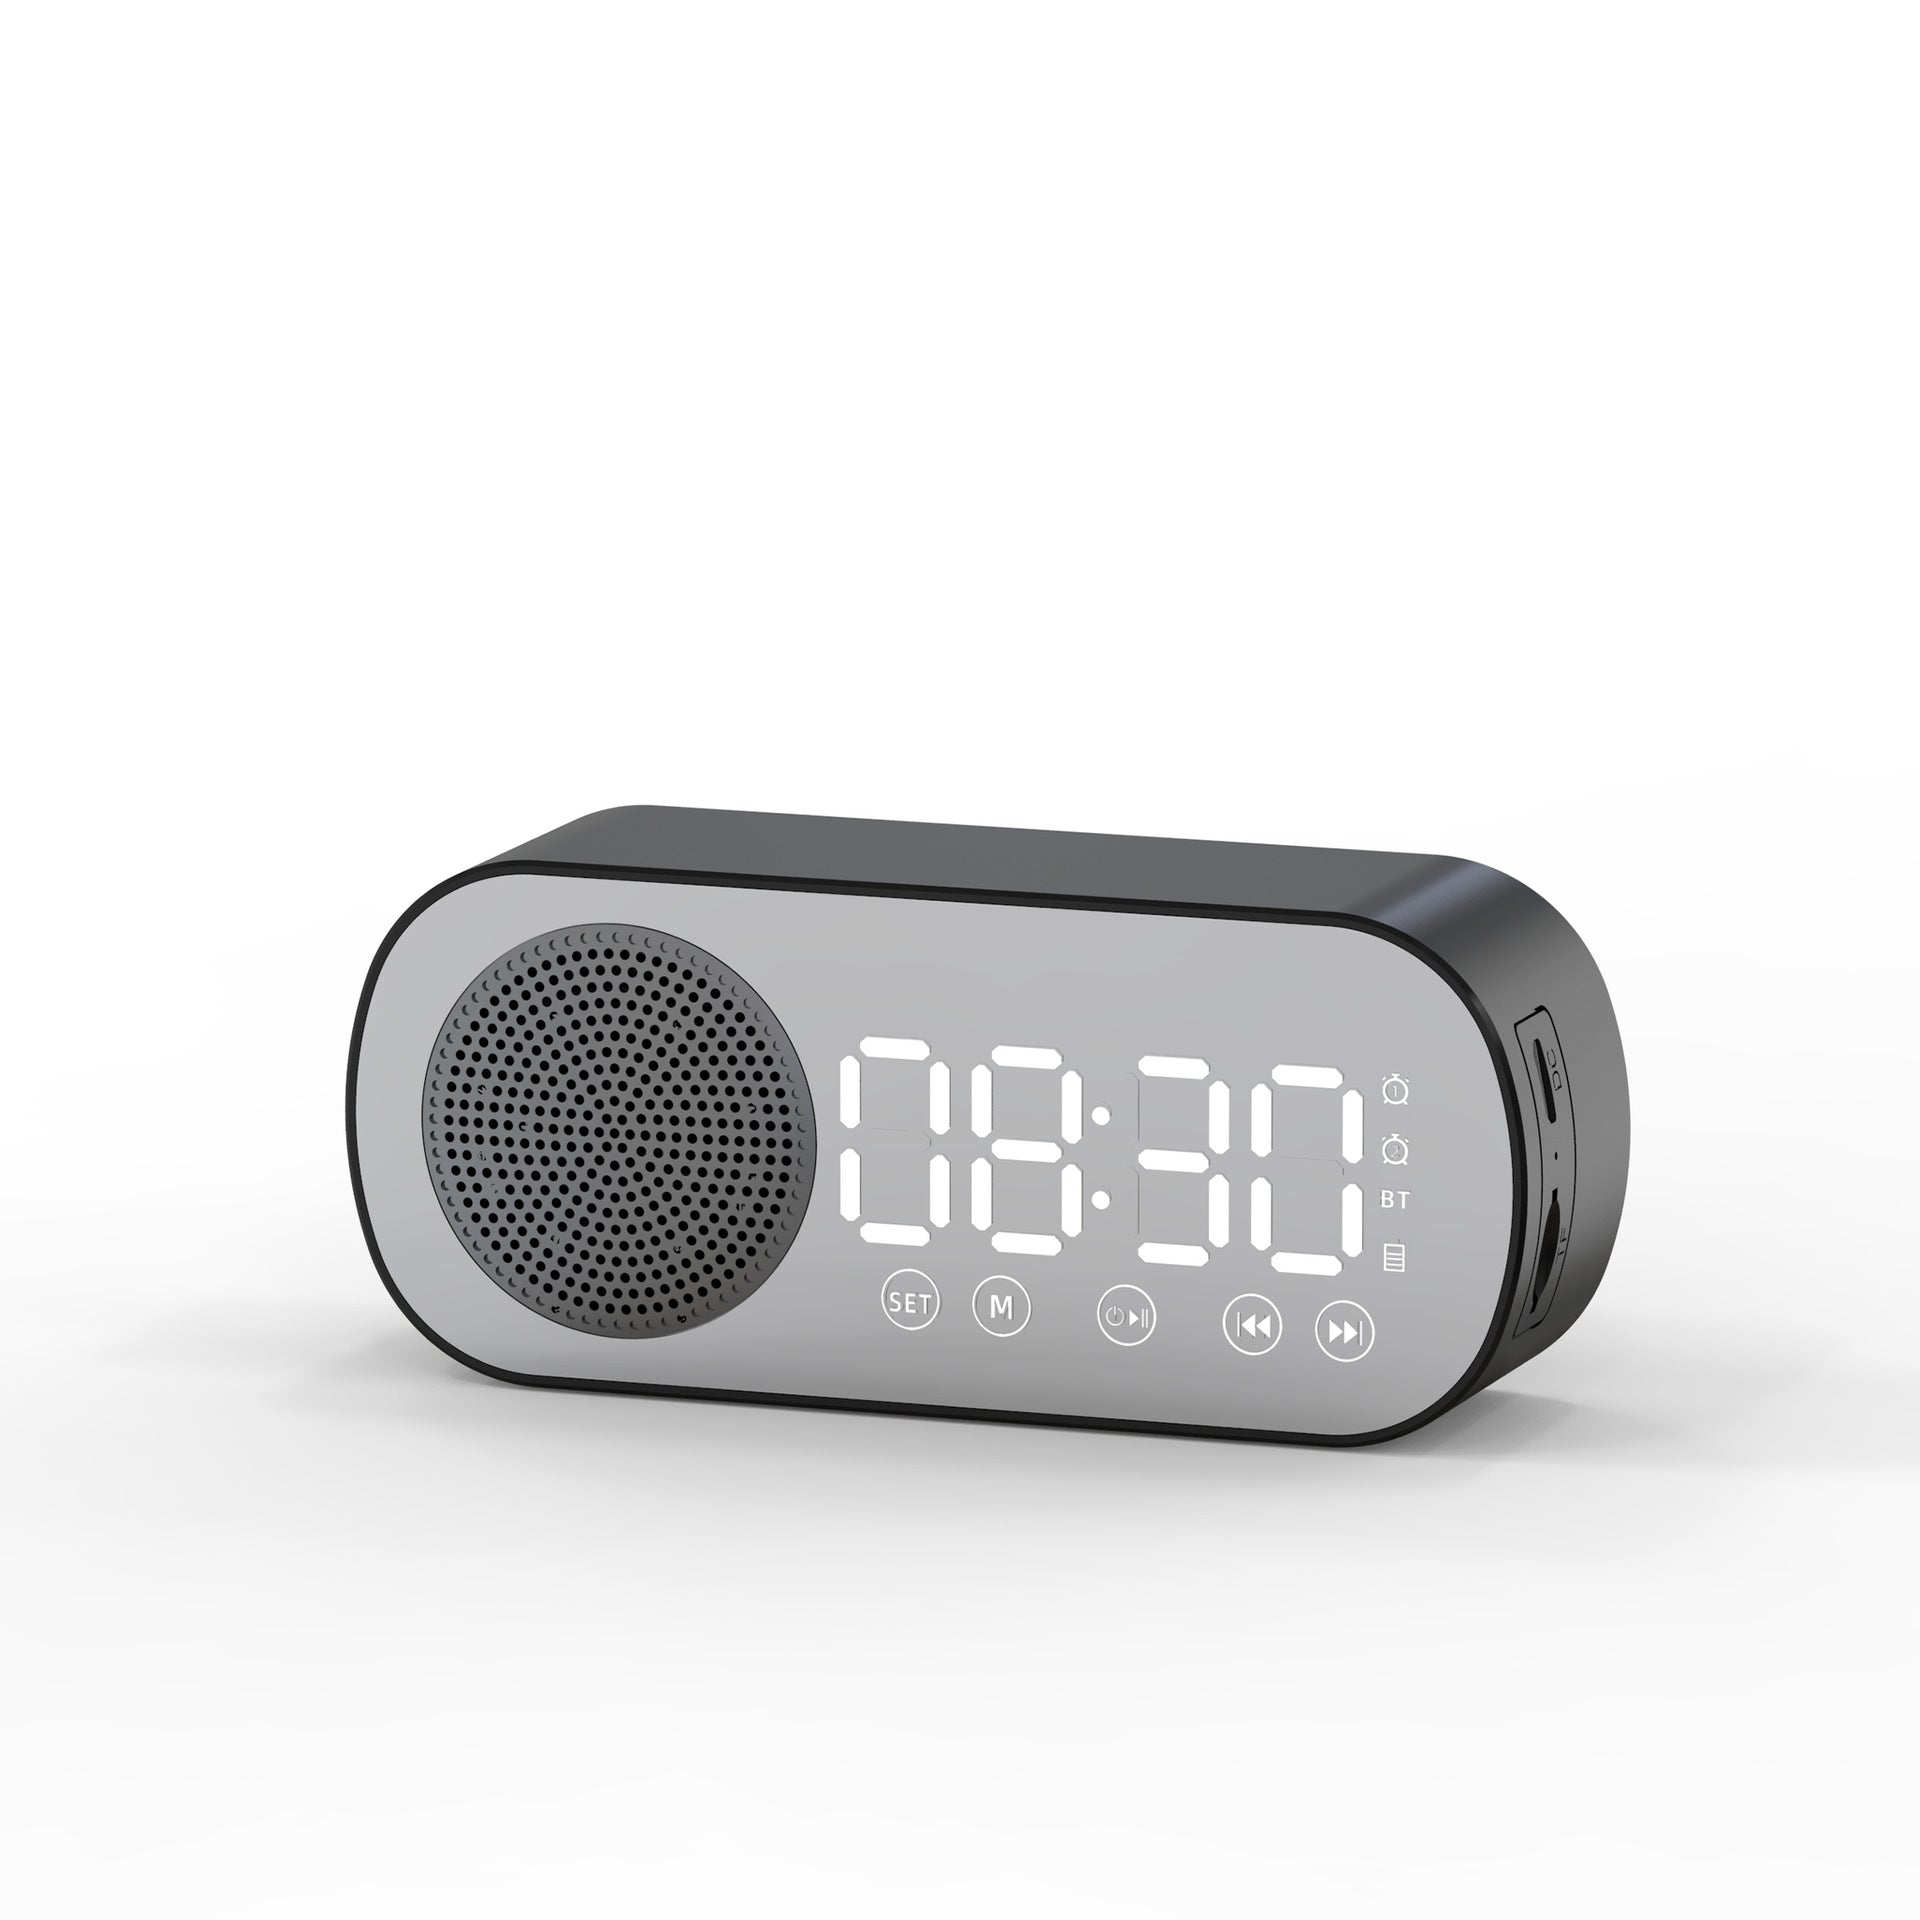 BT Music Alarm Clocks Mirror FM Radio LED Digital Clock 2 Alarm